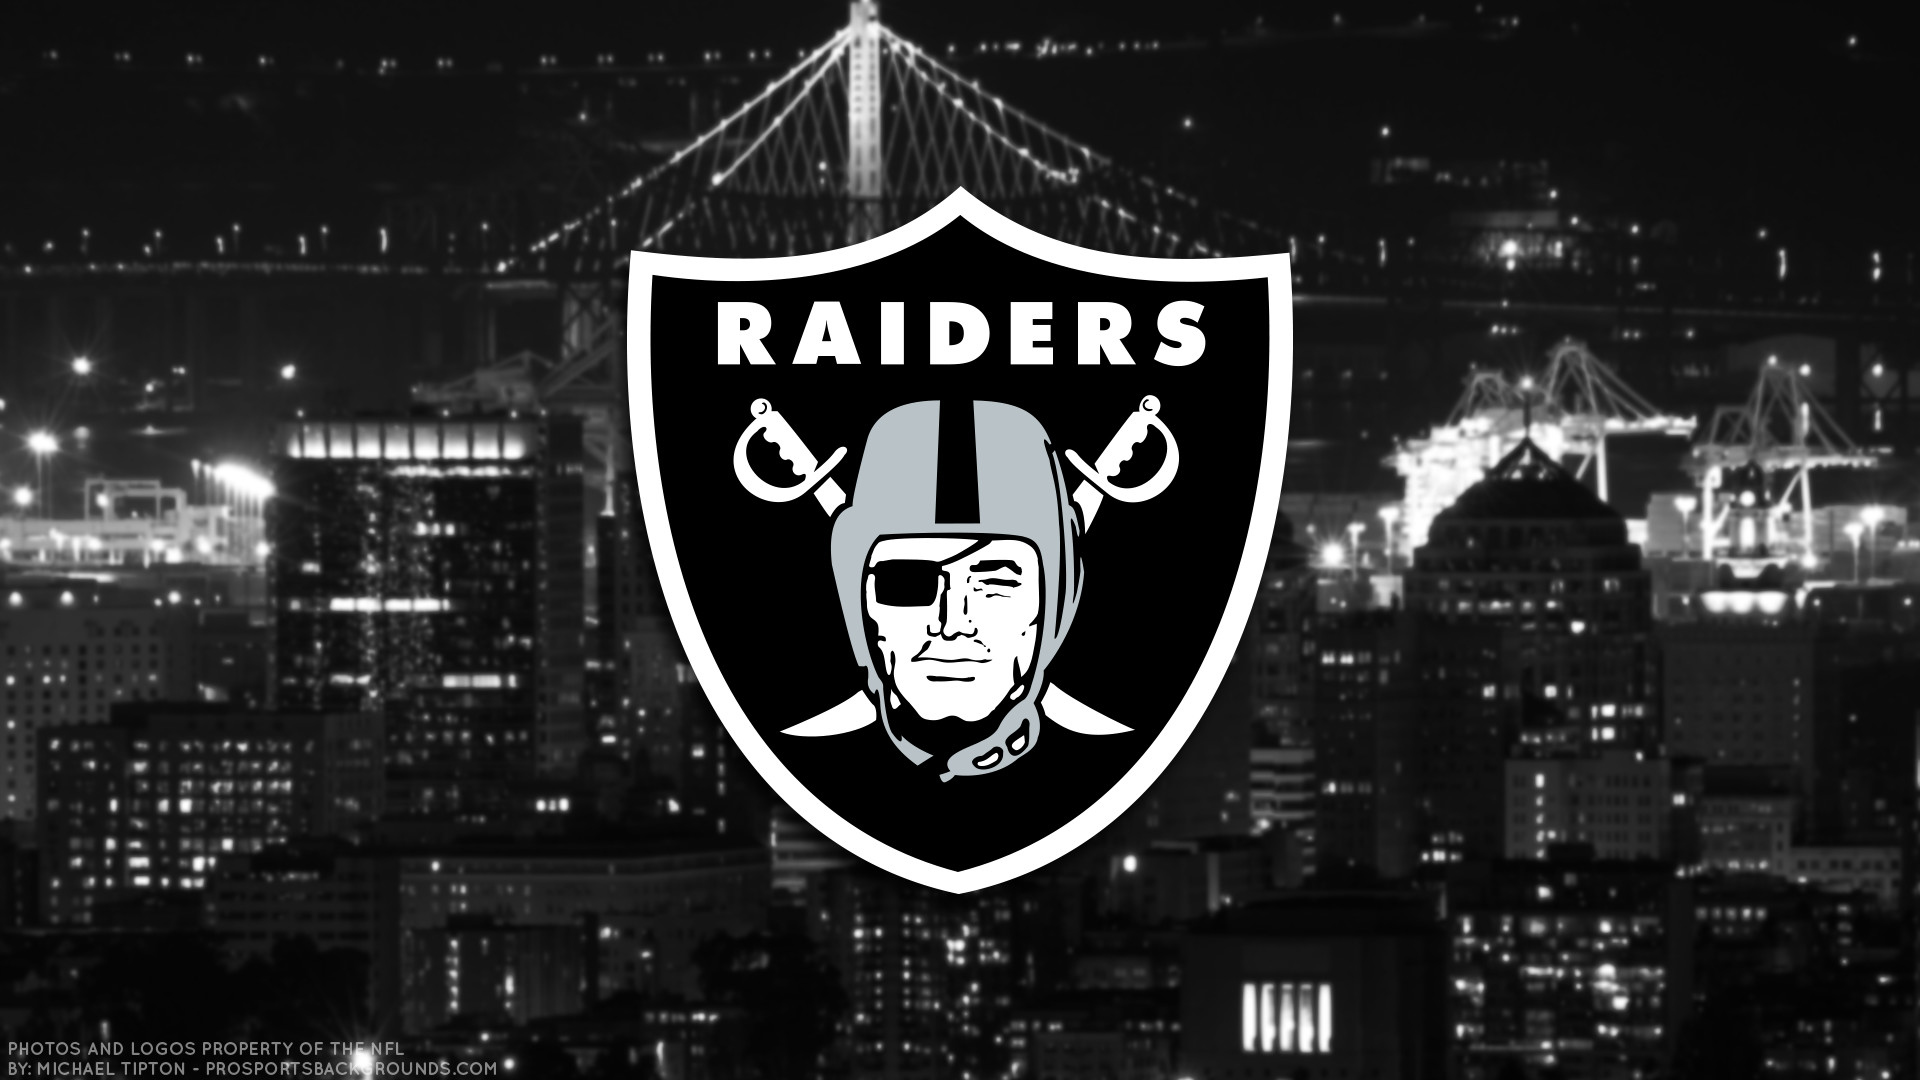 Oakland Raiders 2017 football logo wallpaper pc desktop computer